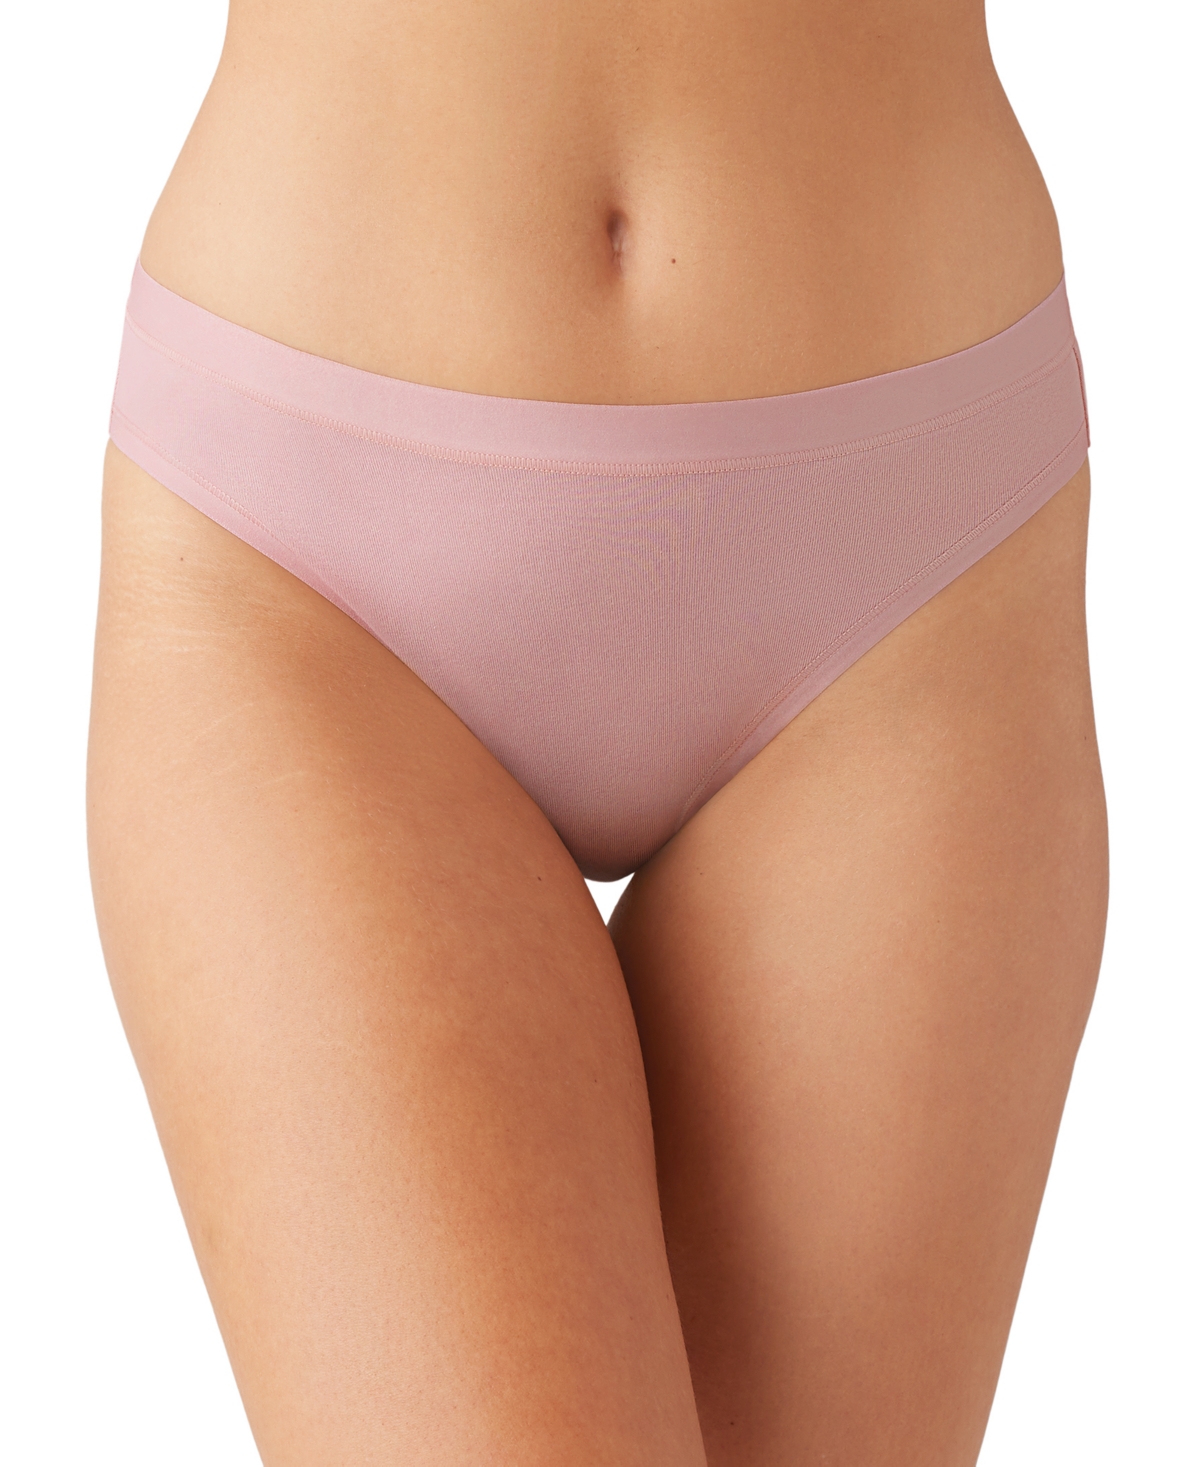 Shop Wacoal Women's Understated Cotton Bikini Underwear 870362 In Zephyr Pink